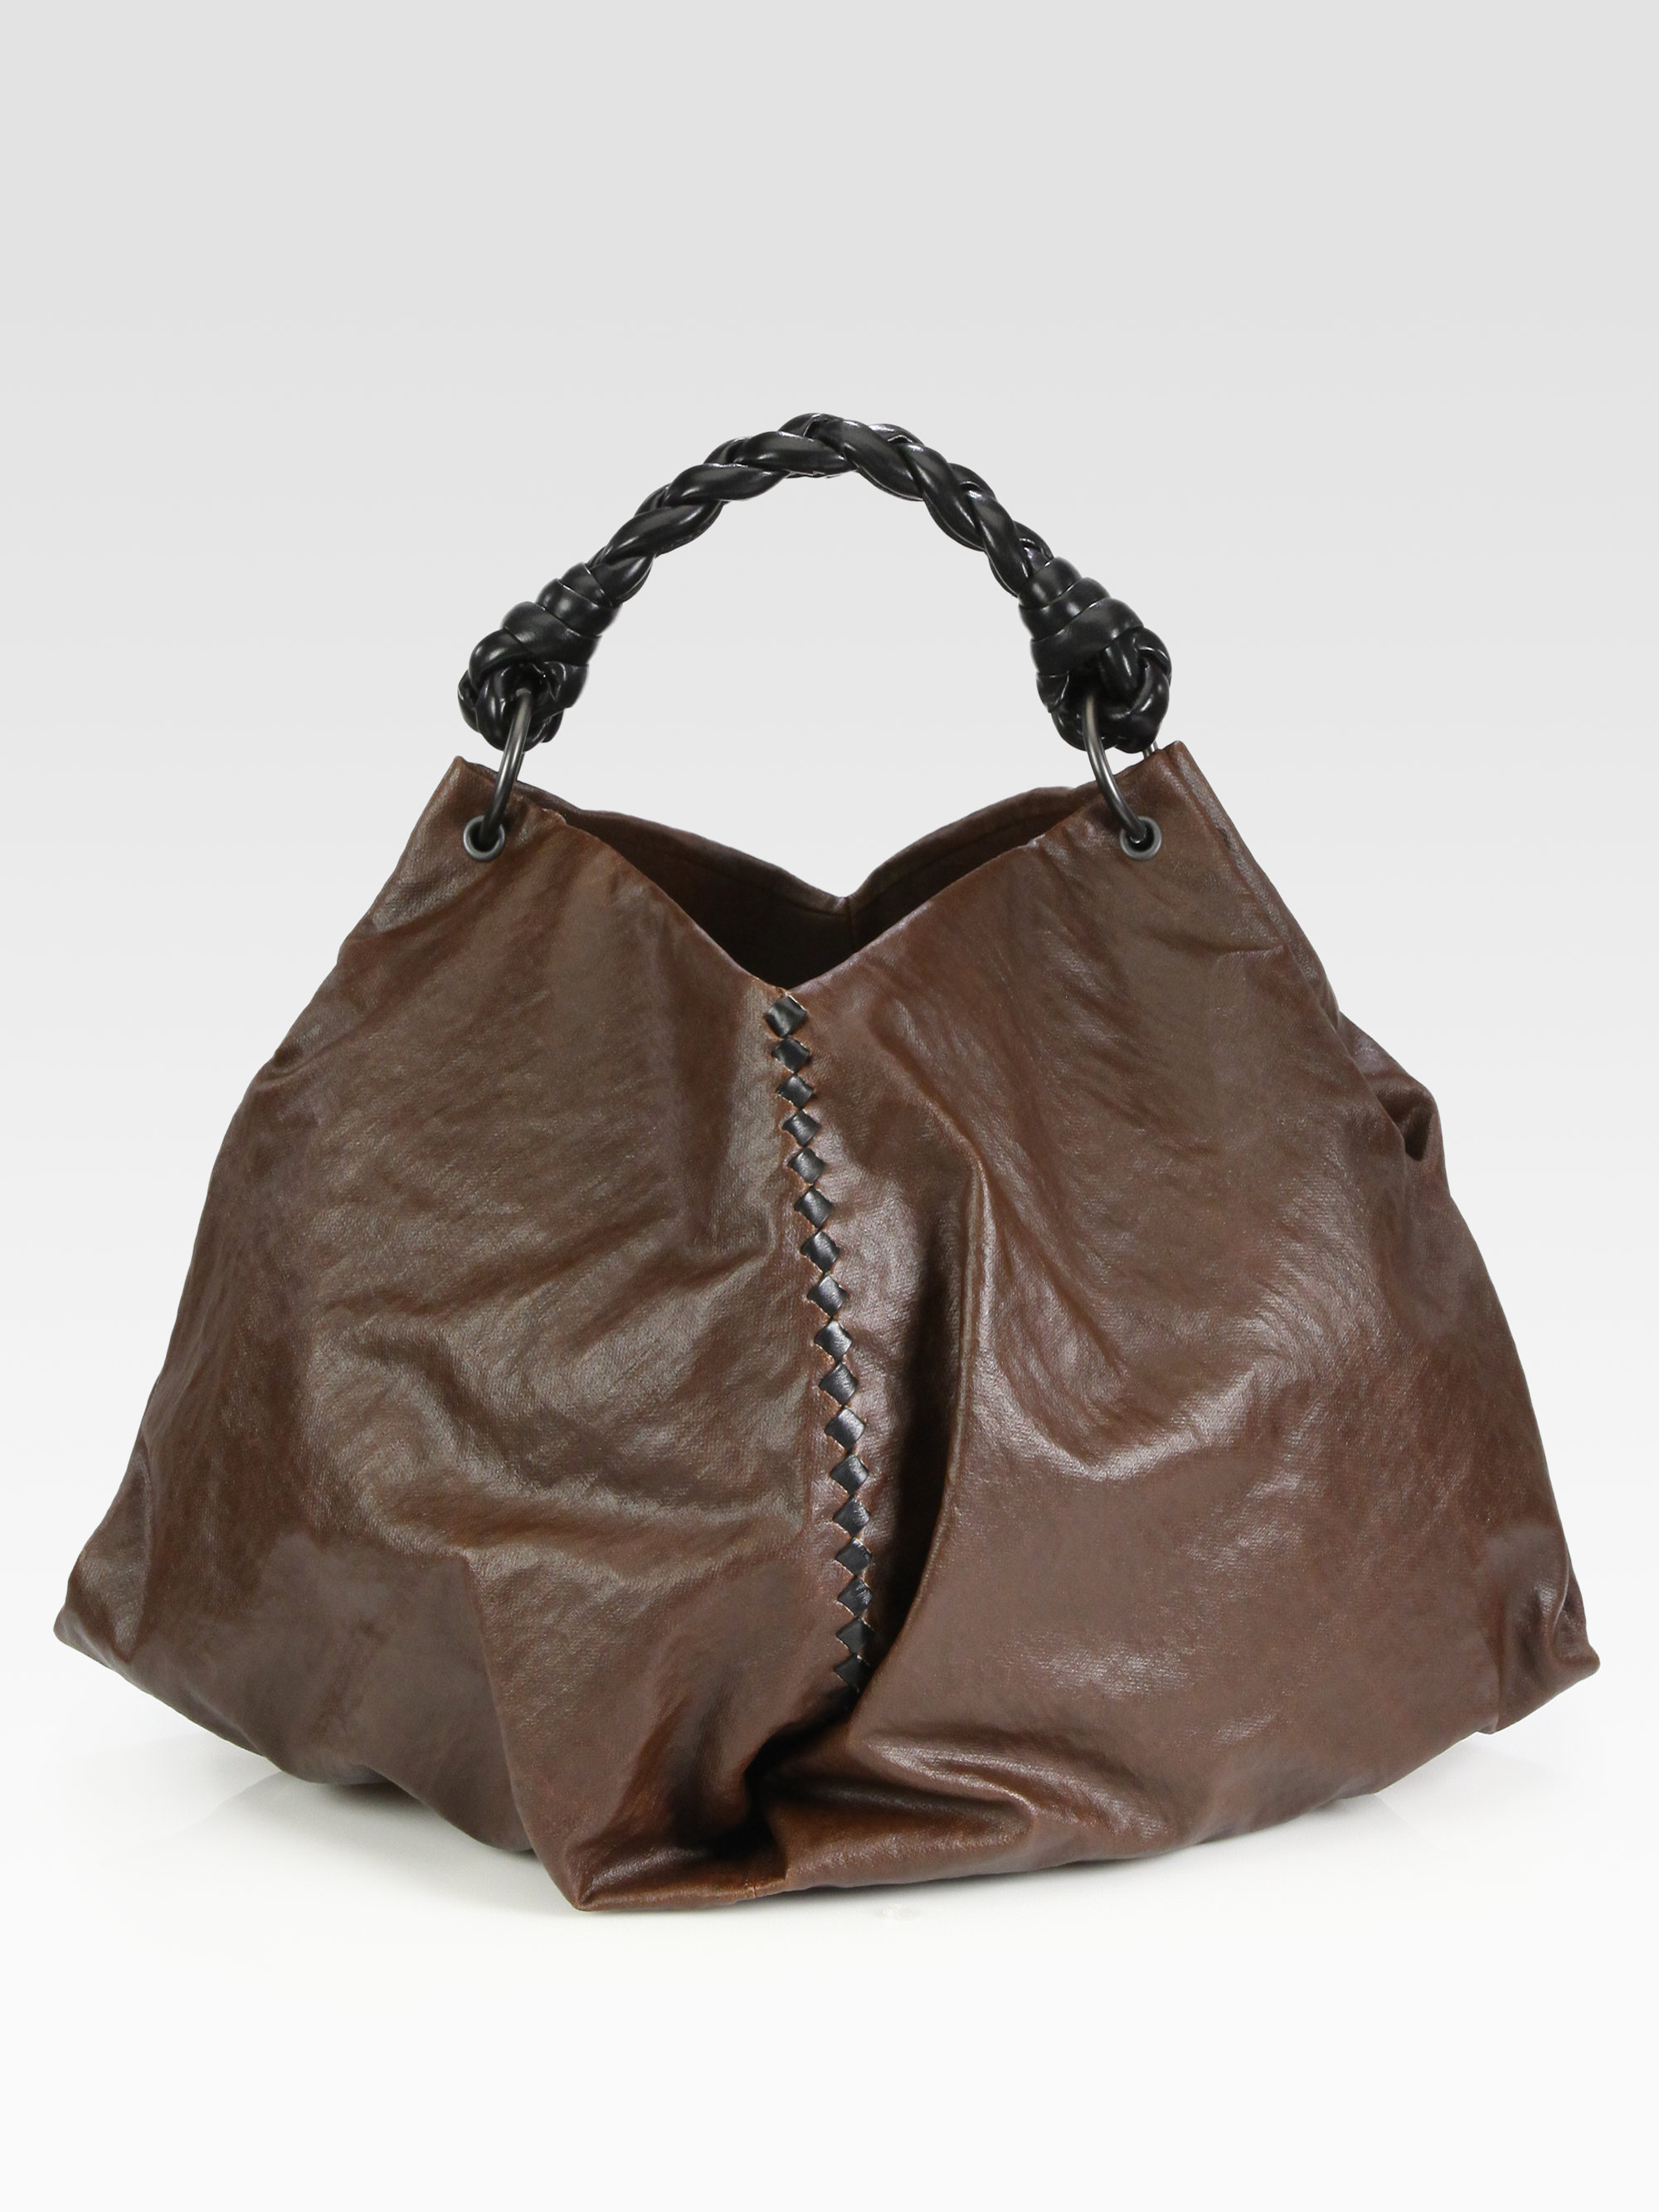 Bottega Veneta Coated Linen Shoulder Bag in Brown - Lyst